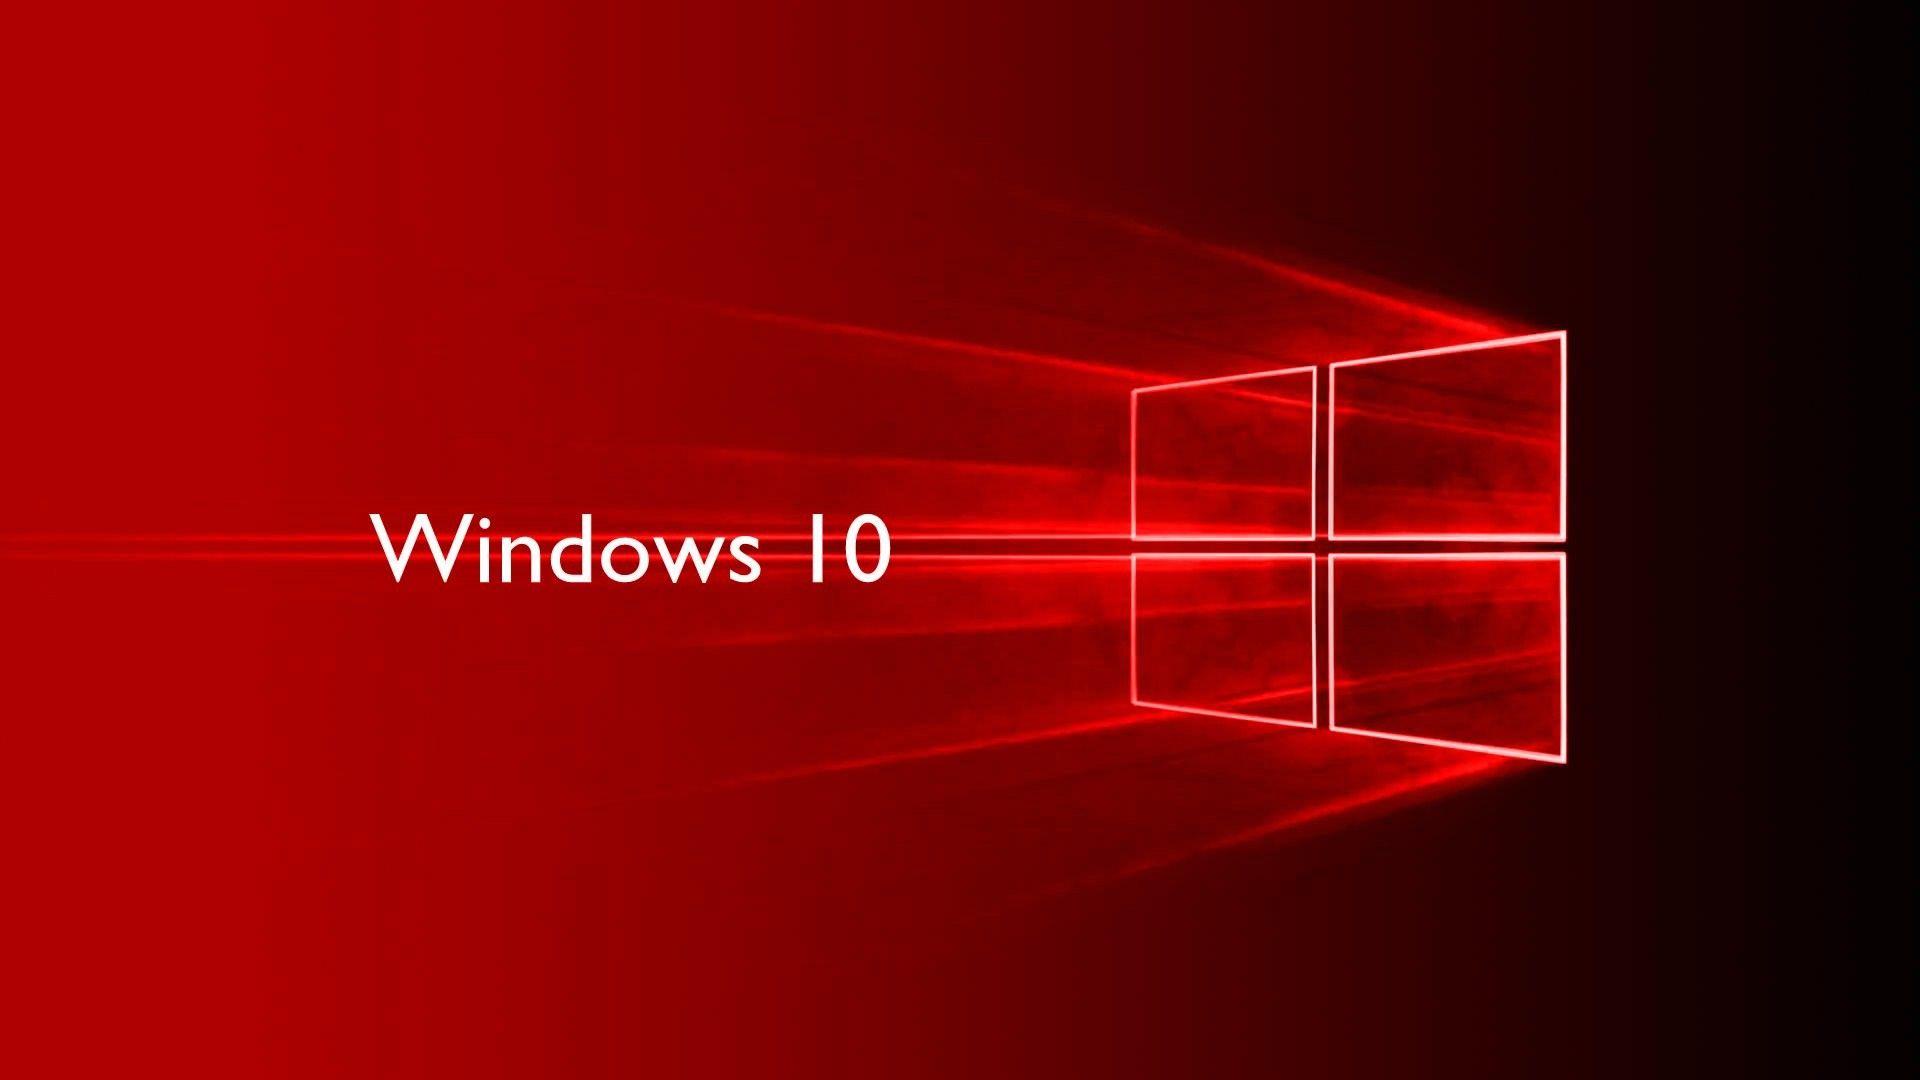 1920 X 1080 Windows 10 Red Wallpapers - Top Free 1920 X 1080 Windows 10